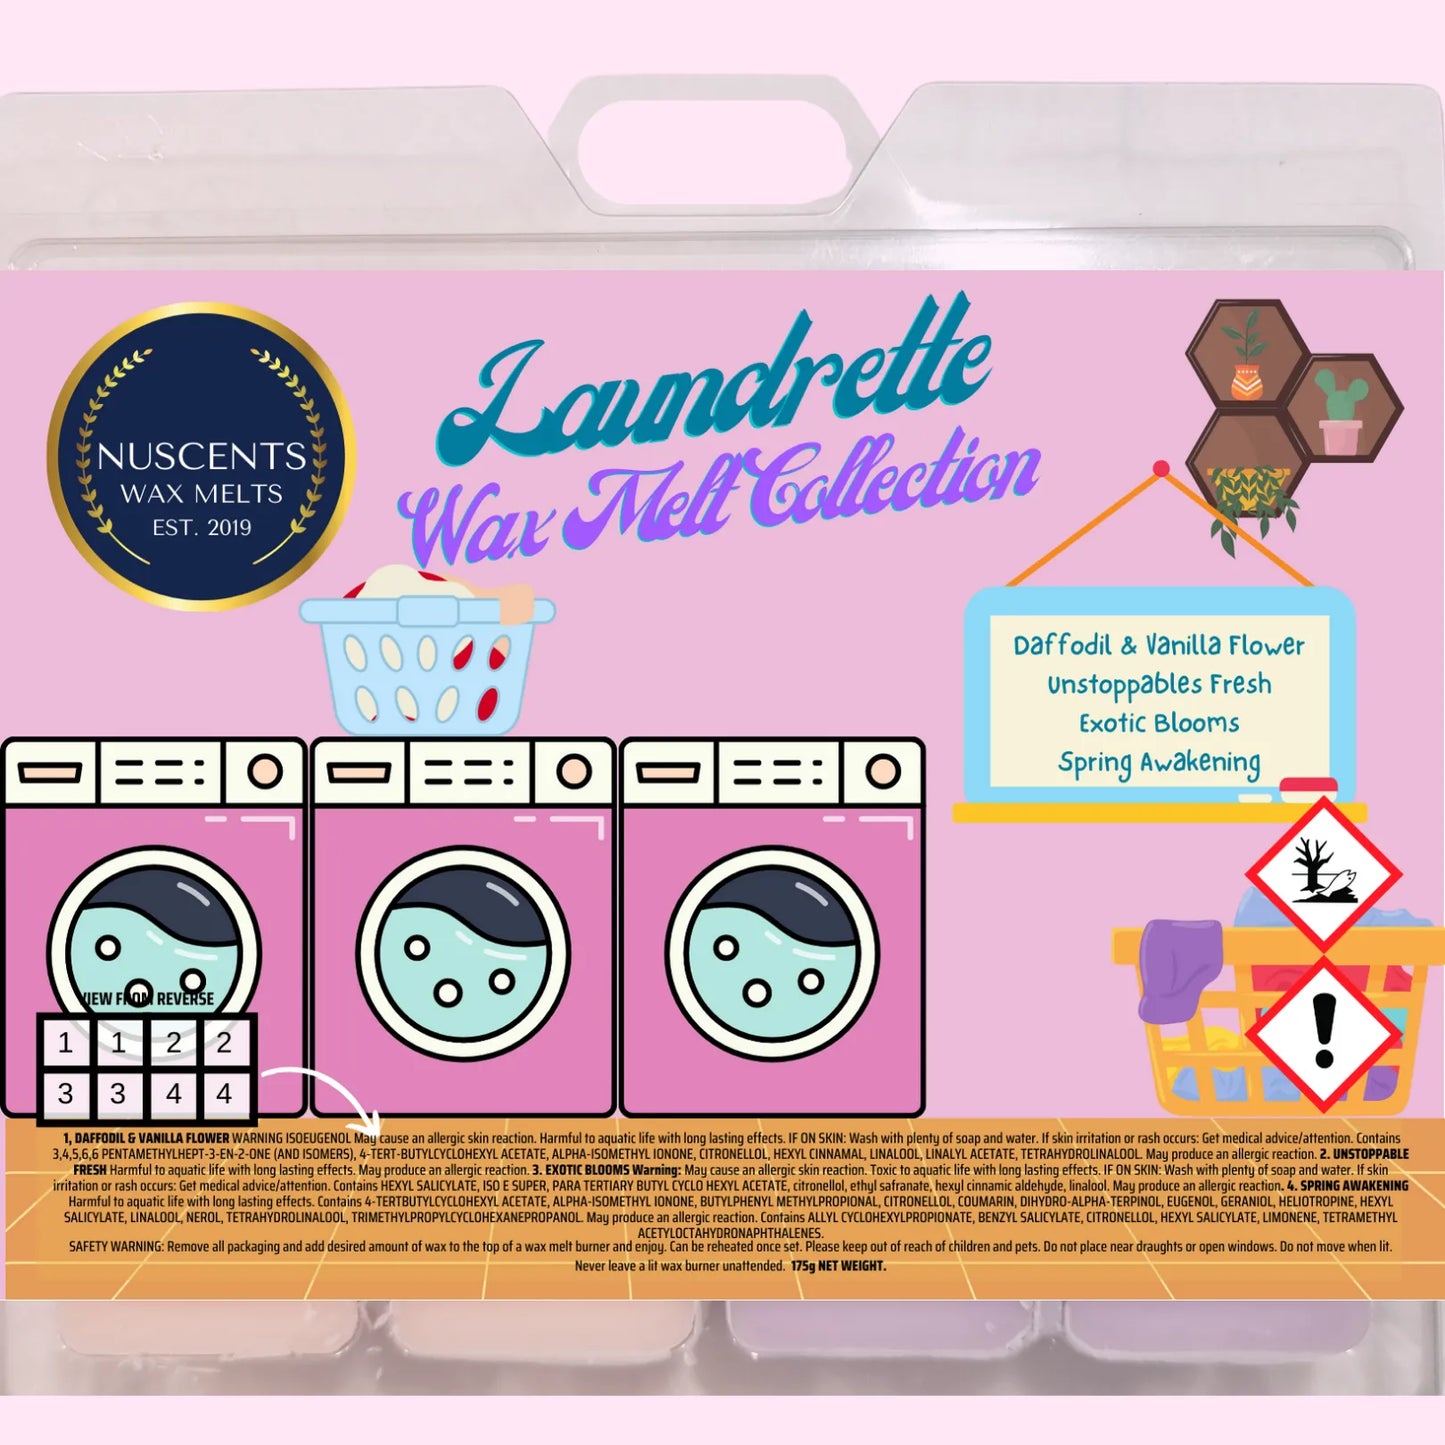 The Laundrette Wax Melt Scent Collection Box